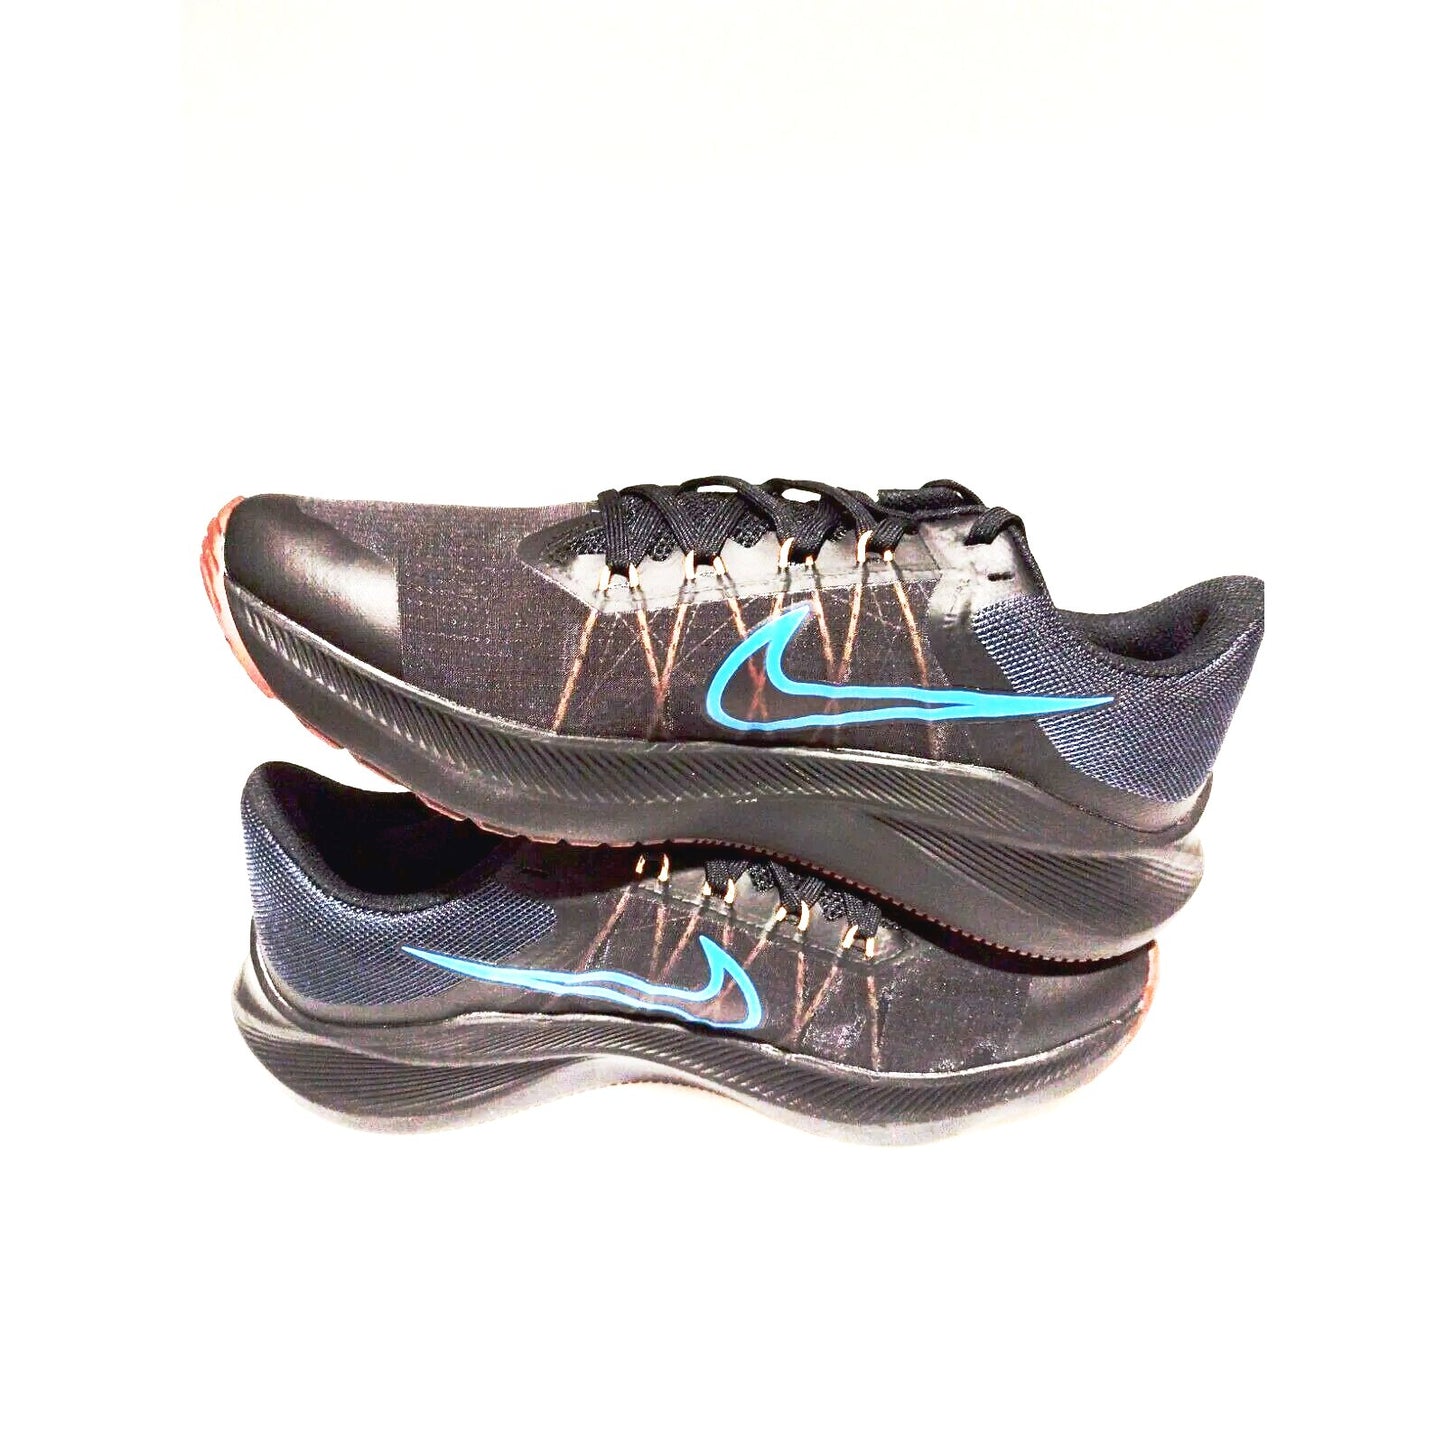 Nike zoom winflo 8 black photo blue running shoes size 11 us men